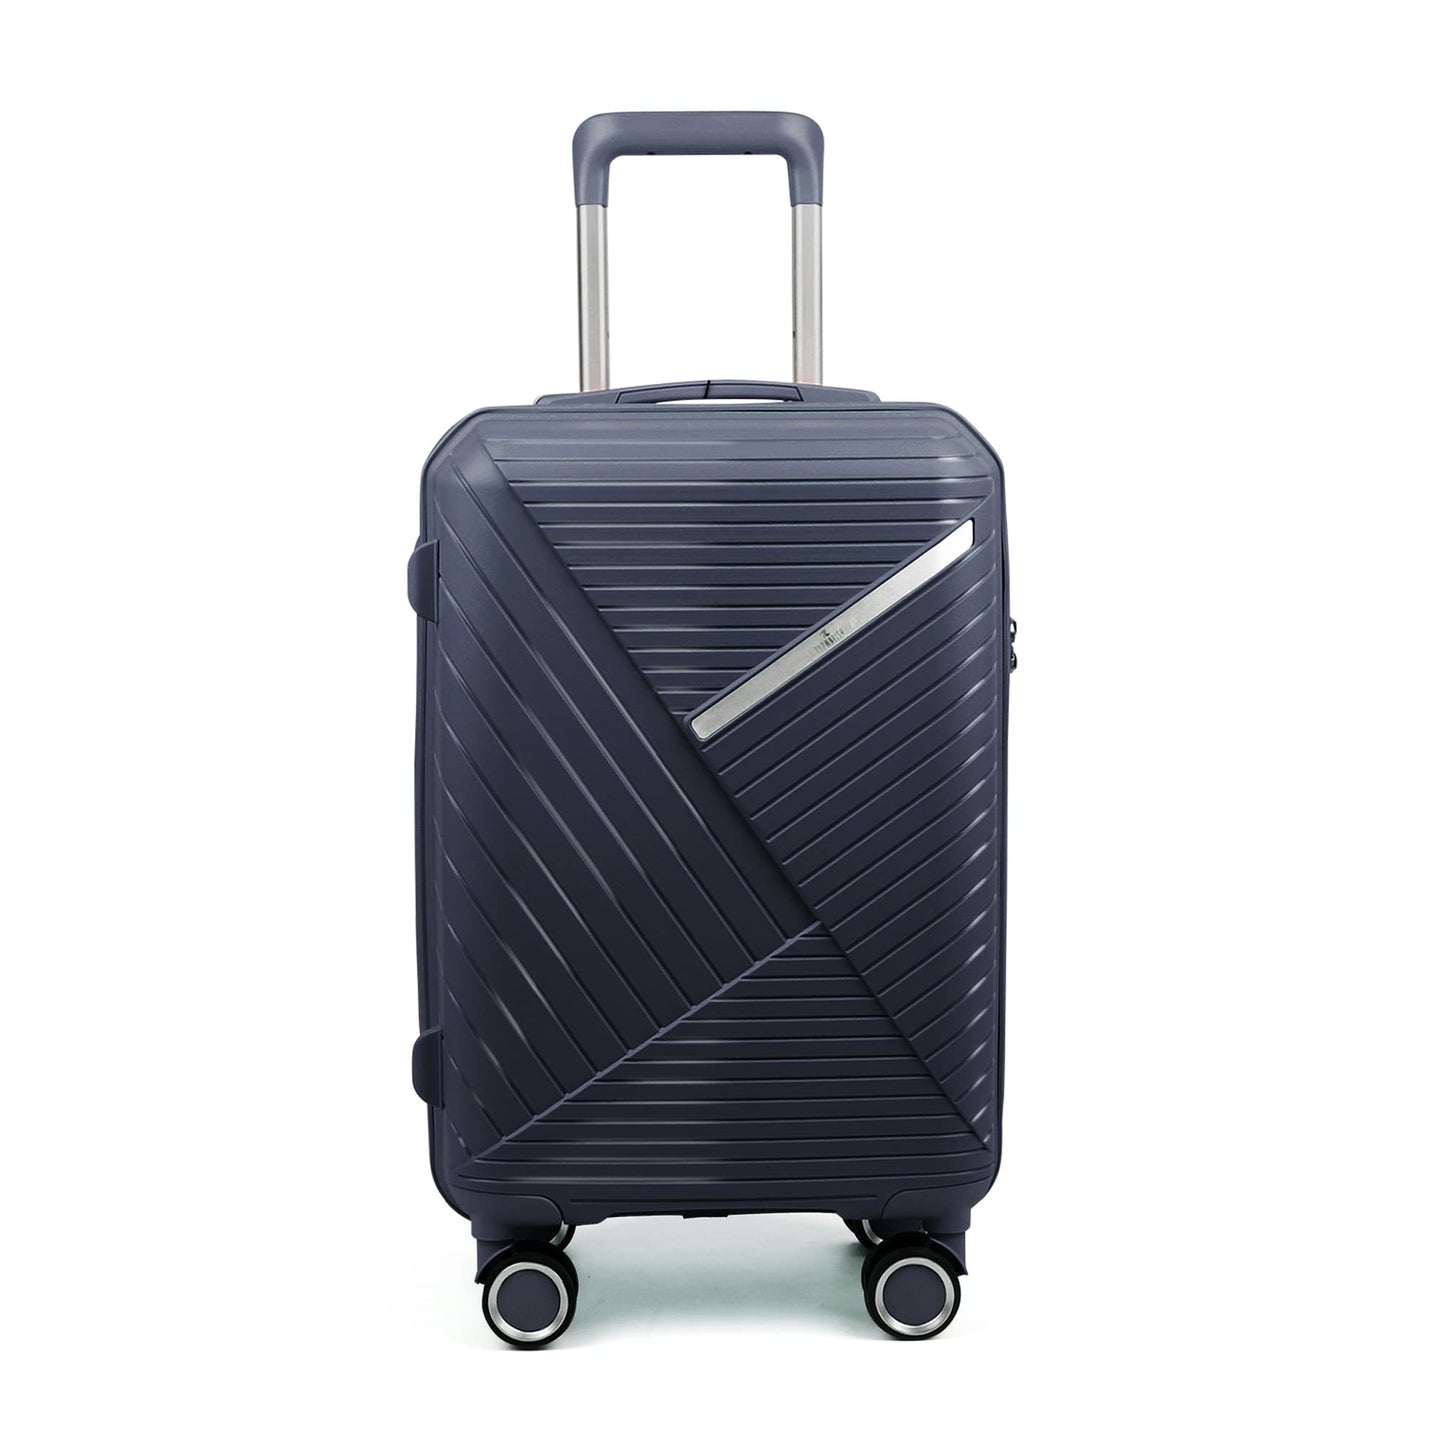 THE CLOWNFISH Denzel Series Luggage Polypropylene Hard Case Suitcase Eight Wheel Trolley Bag with TSA Lock- Navy Blue (Medium size, 66 cm-26 inch)